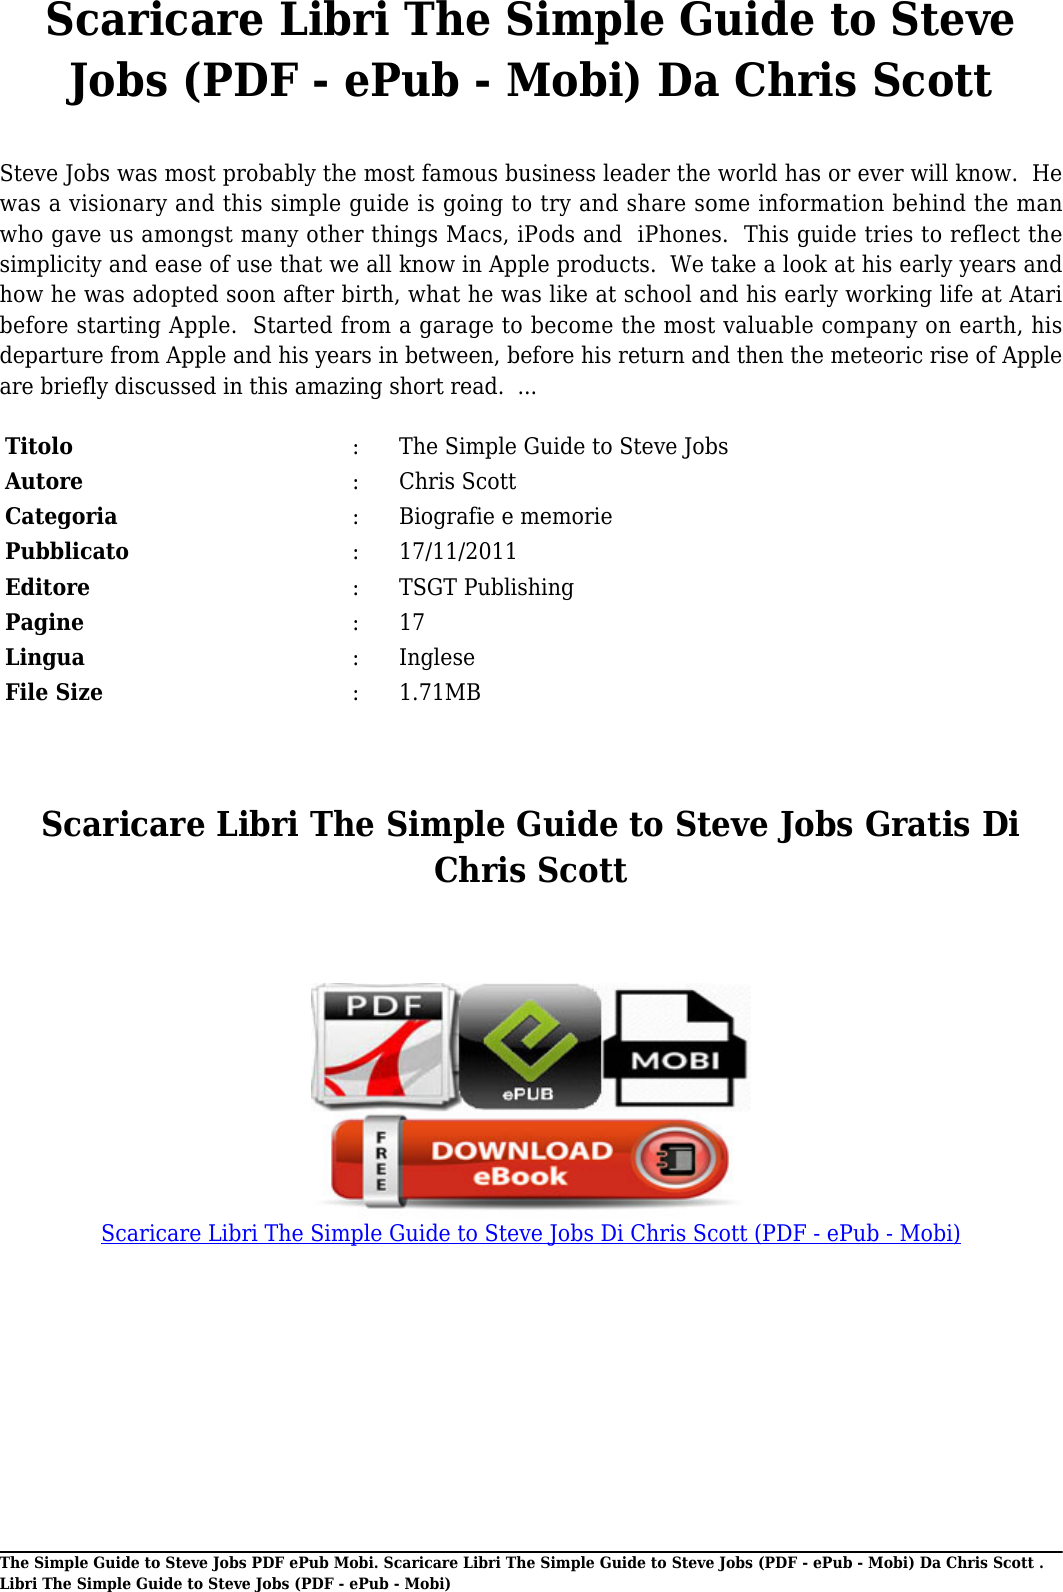 Page 2 of 10 - Scaricare Libri Gratis The Simple Guide To Steve Jobs Di Chris Scott(PDF - EPub Mobi) Scott